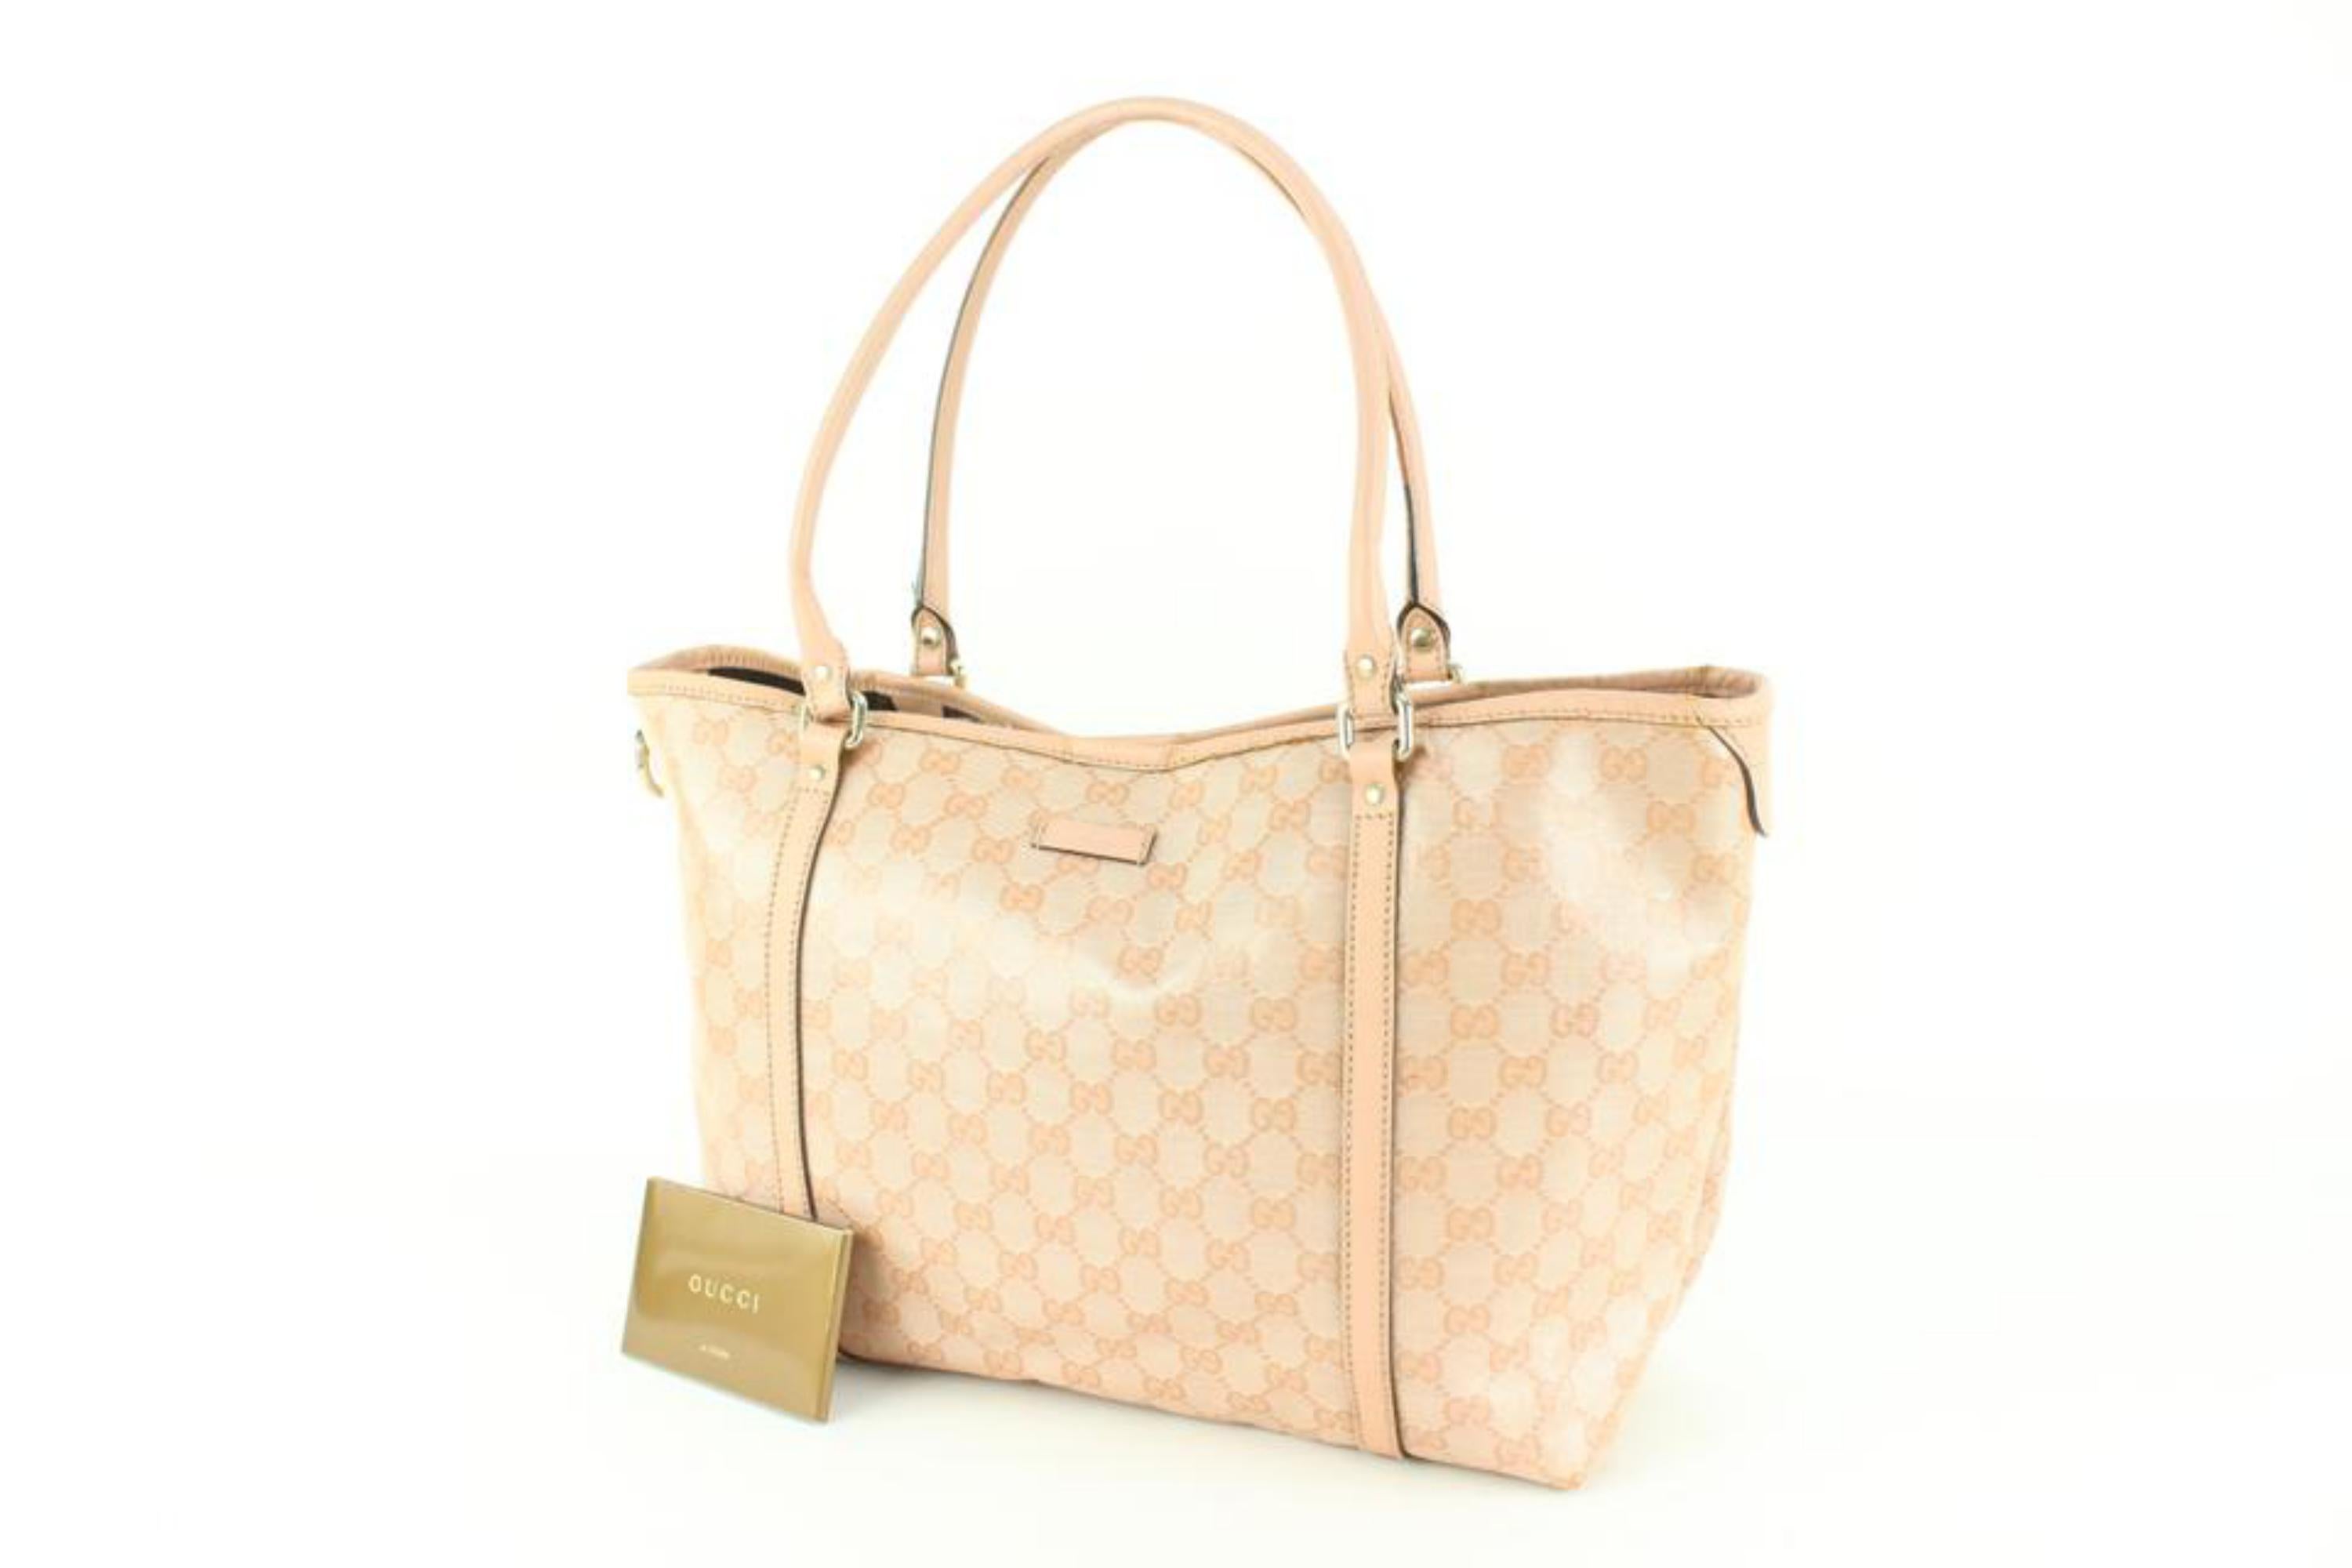 Gucci Pink Monogram GG Crystal Joy Tote Bag 66gk512s 6